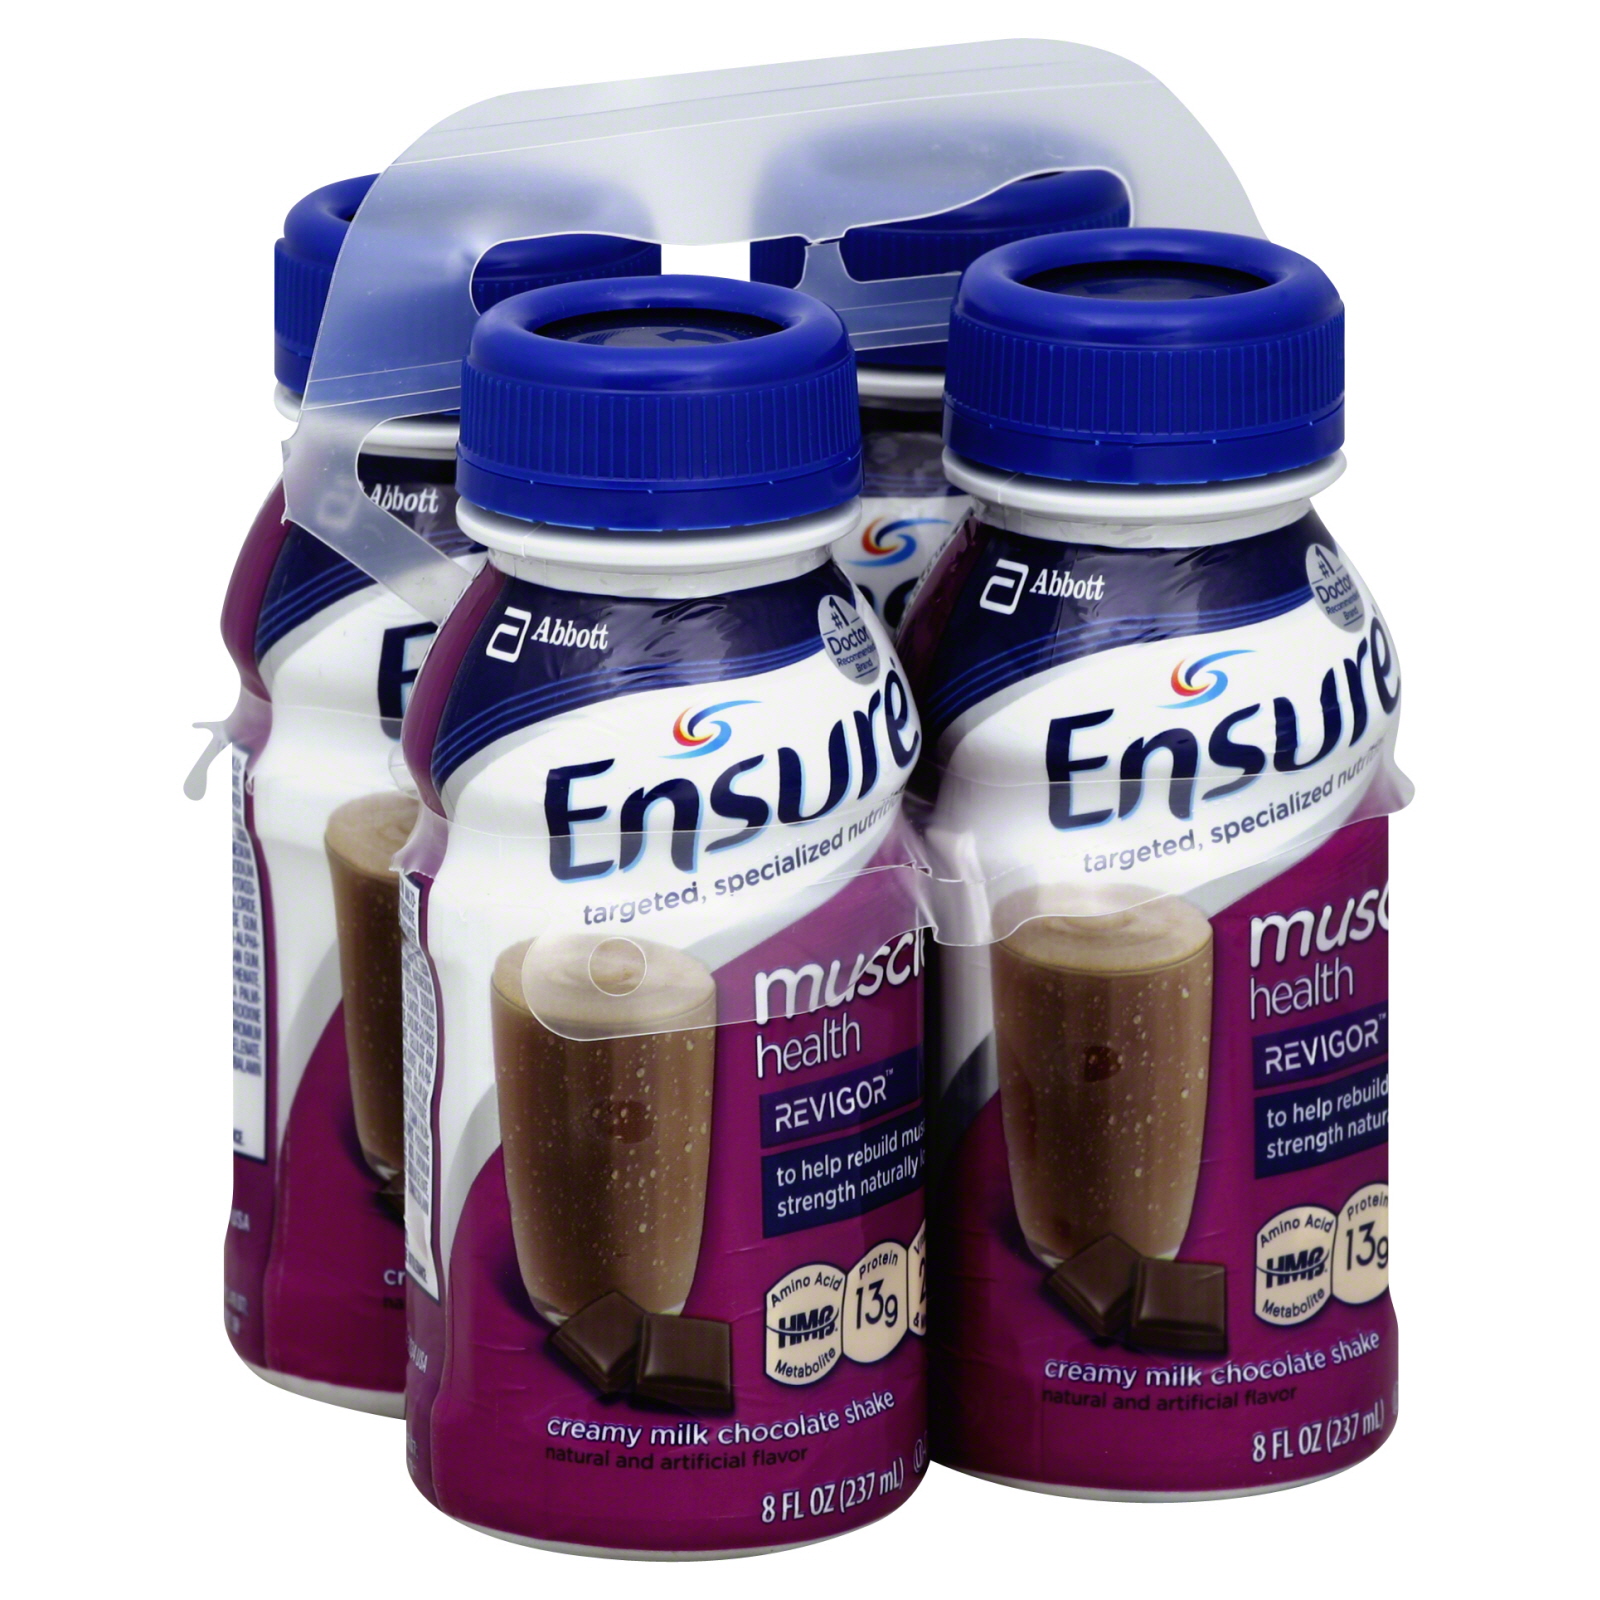 Ensure Shake, Creamy Milk Chocolate, Muscle Health, 4 - 8 fl oz (237 ml) bottles